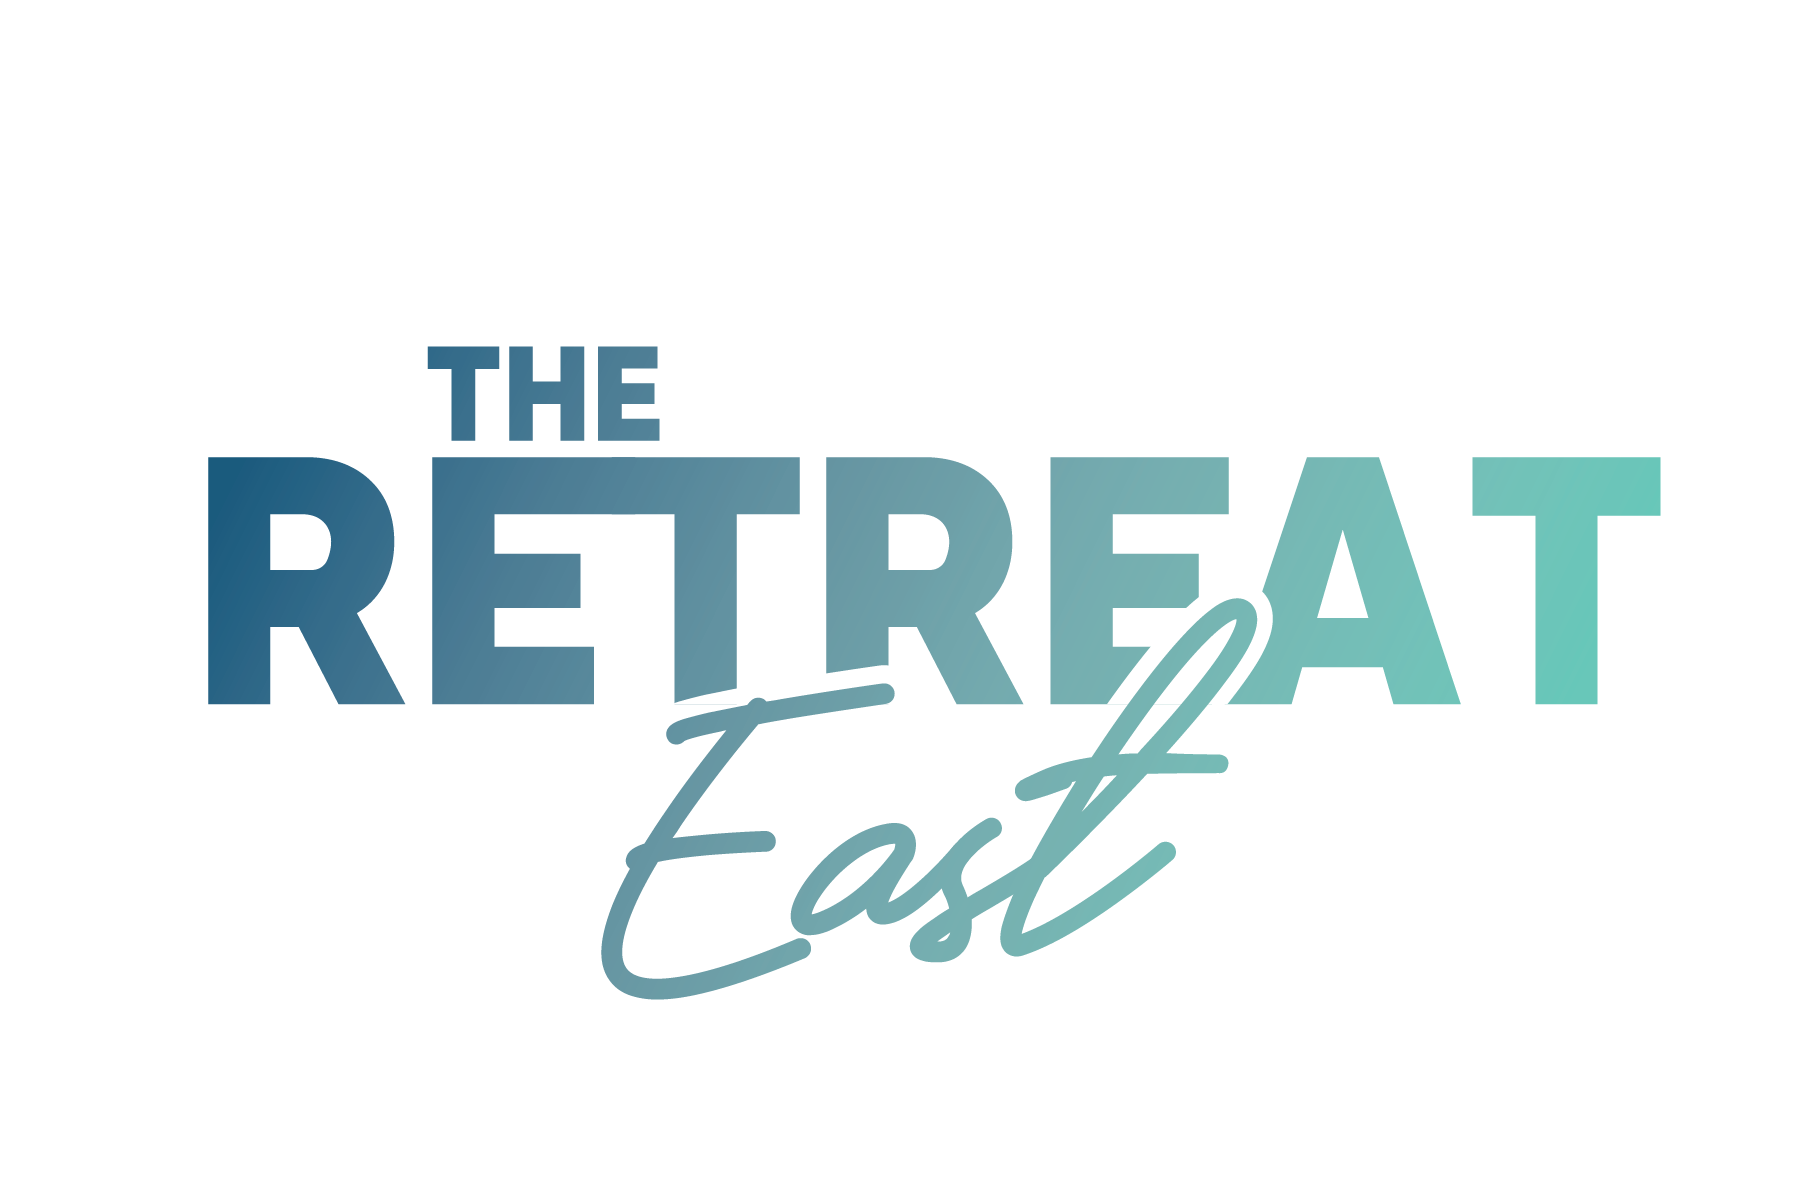 The retreat east logo